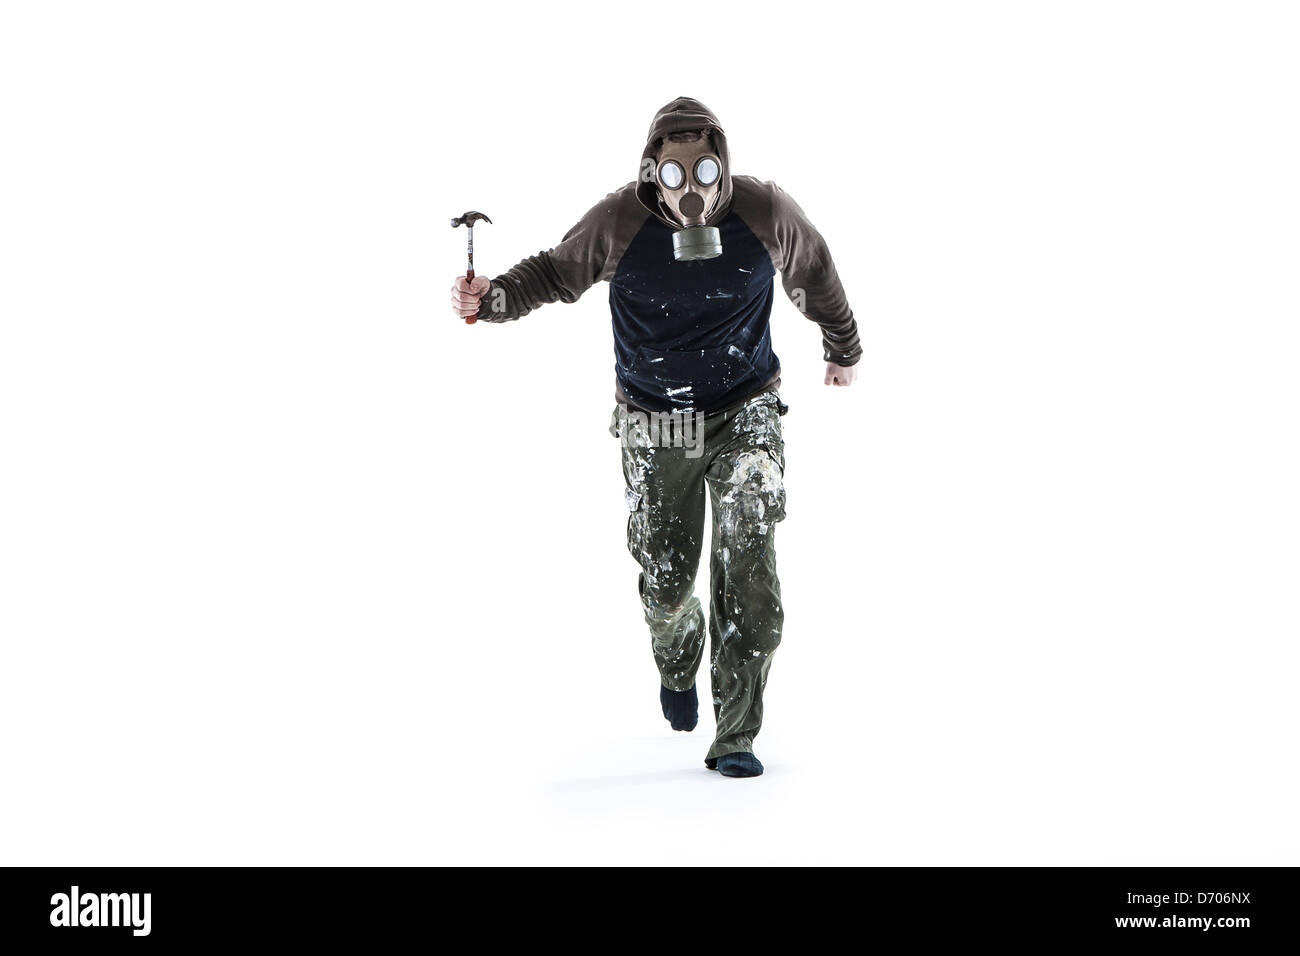 figure wearing a gas mask running towards camera wielding a hammer Stock Photo